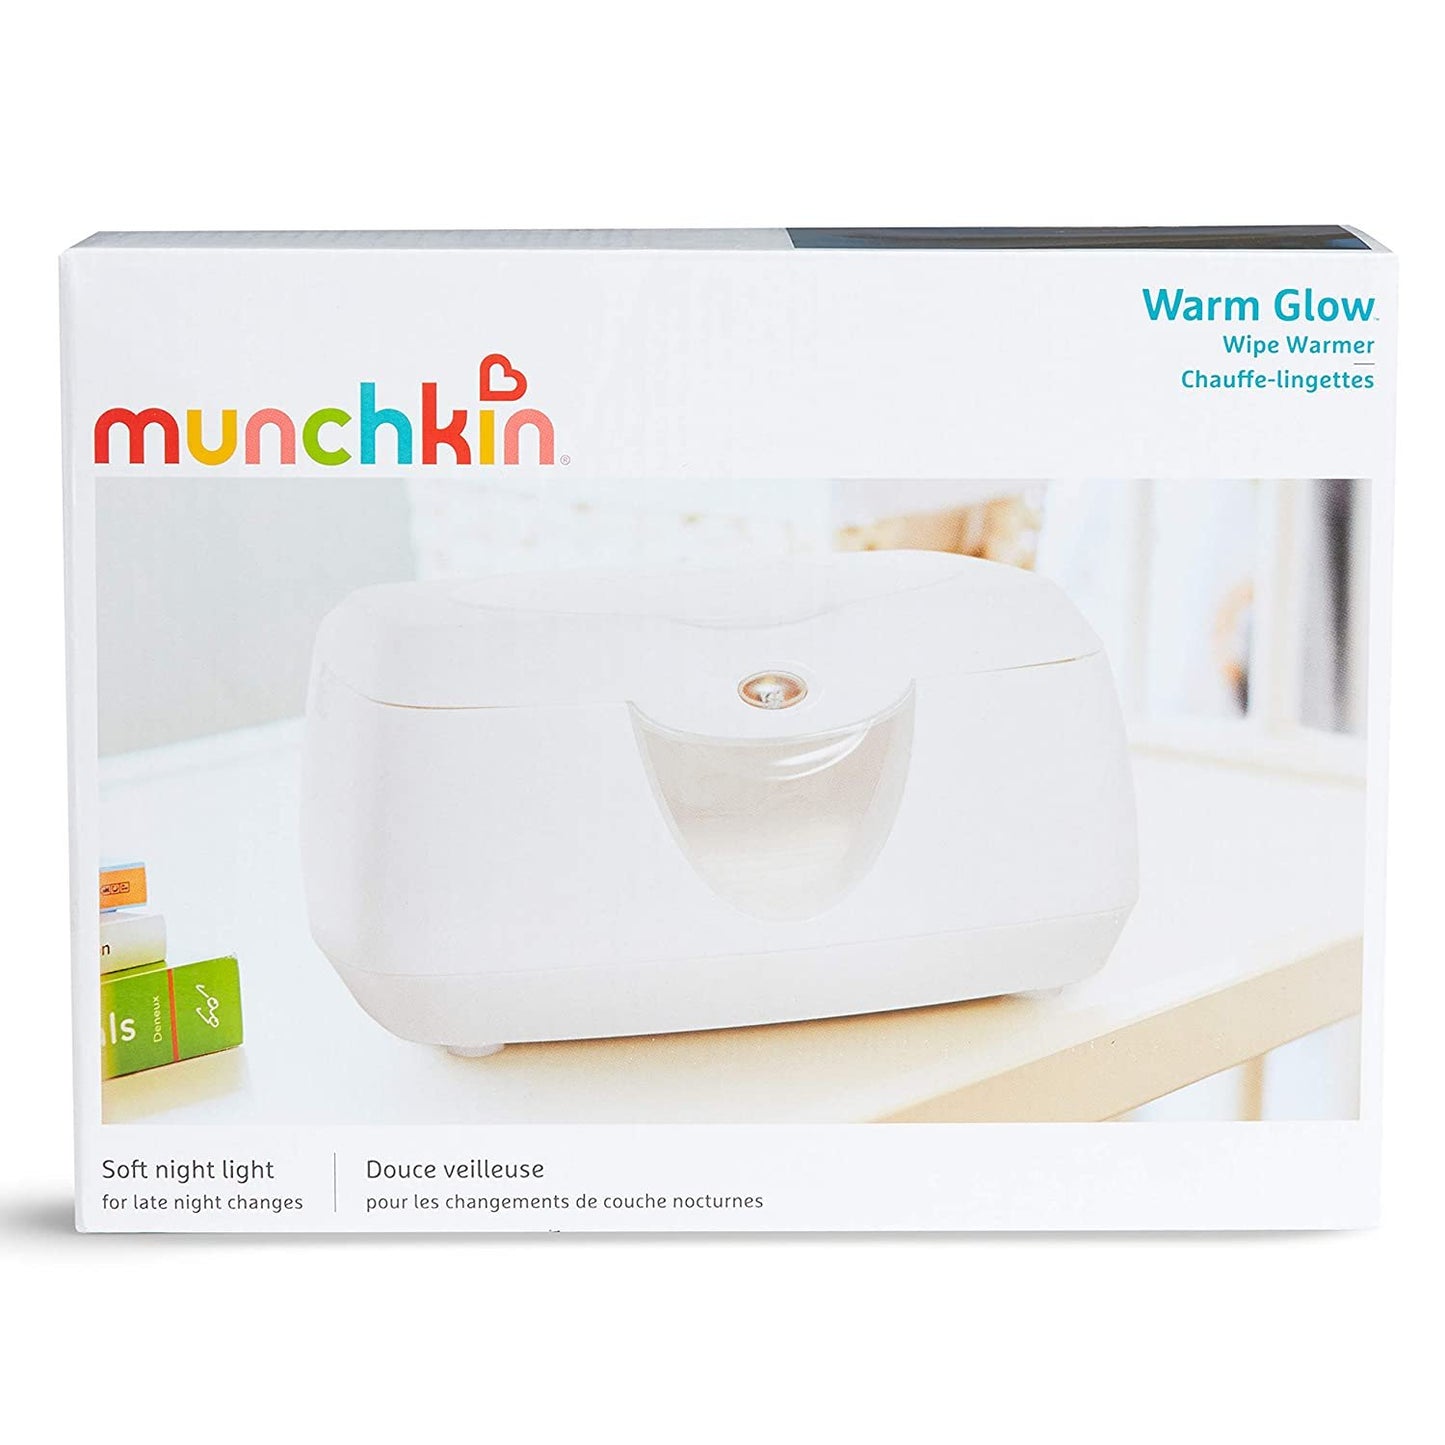 Munchkin Warm Glow Wipe Warmer, Holds up to 100 Standard-Sized Baby Wipes, White